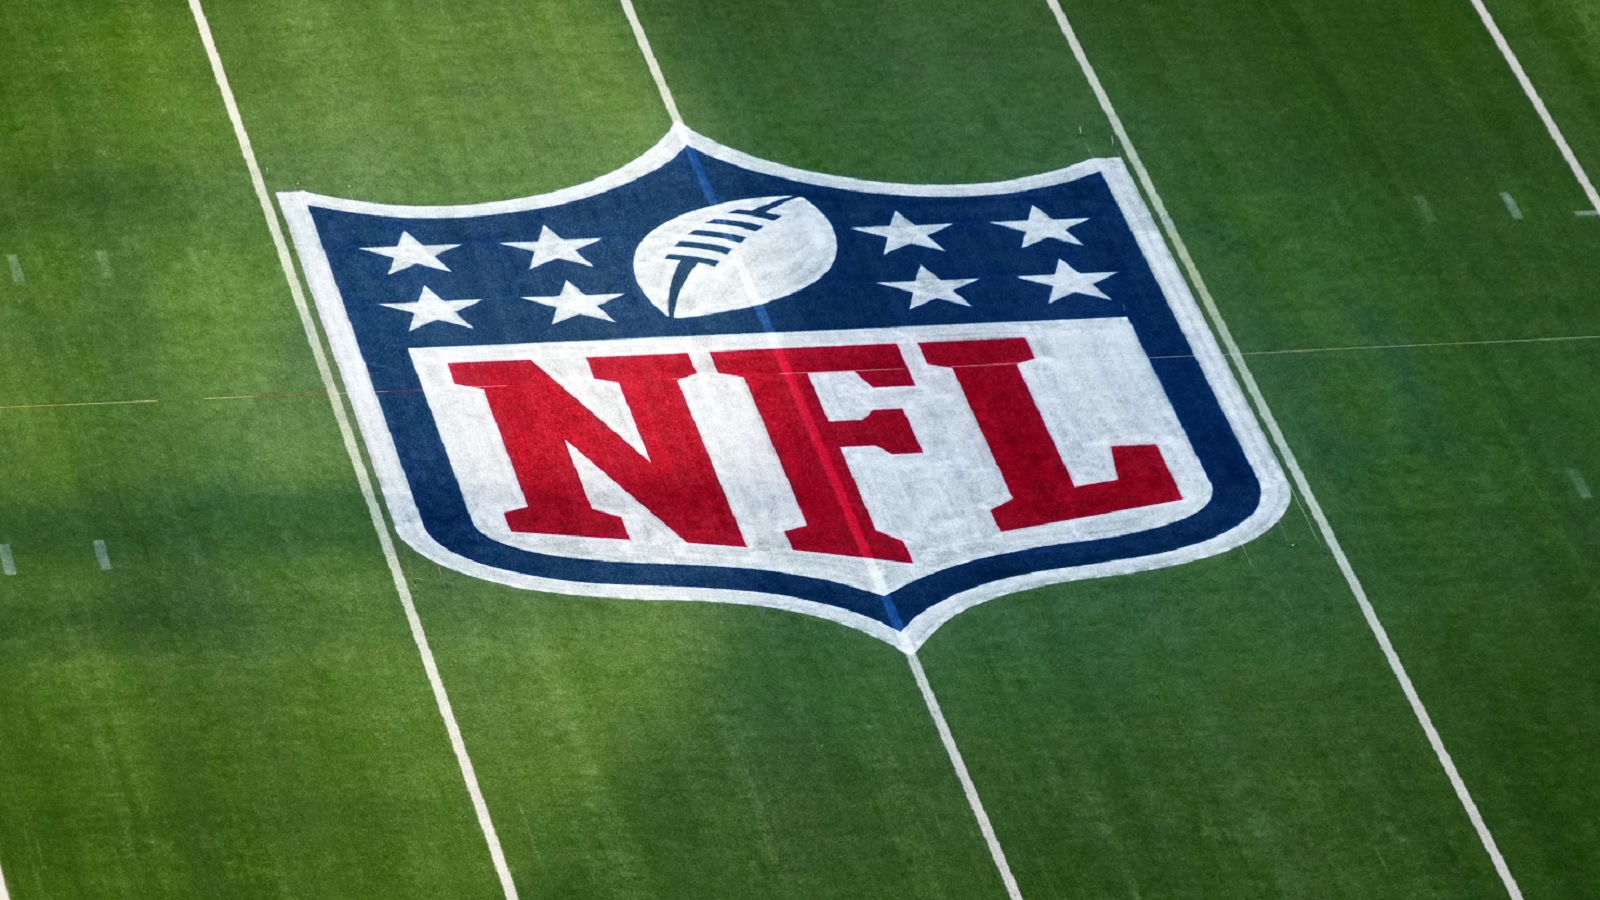 An NFL logo on the field